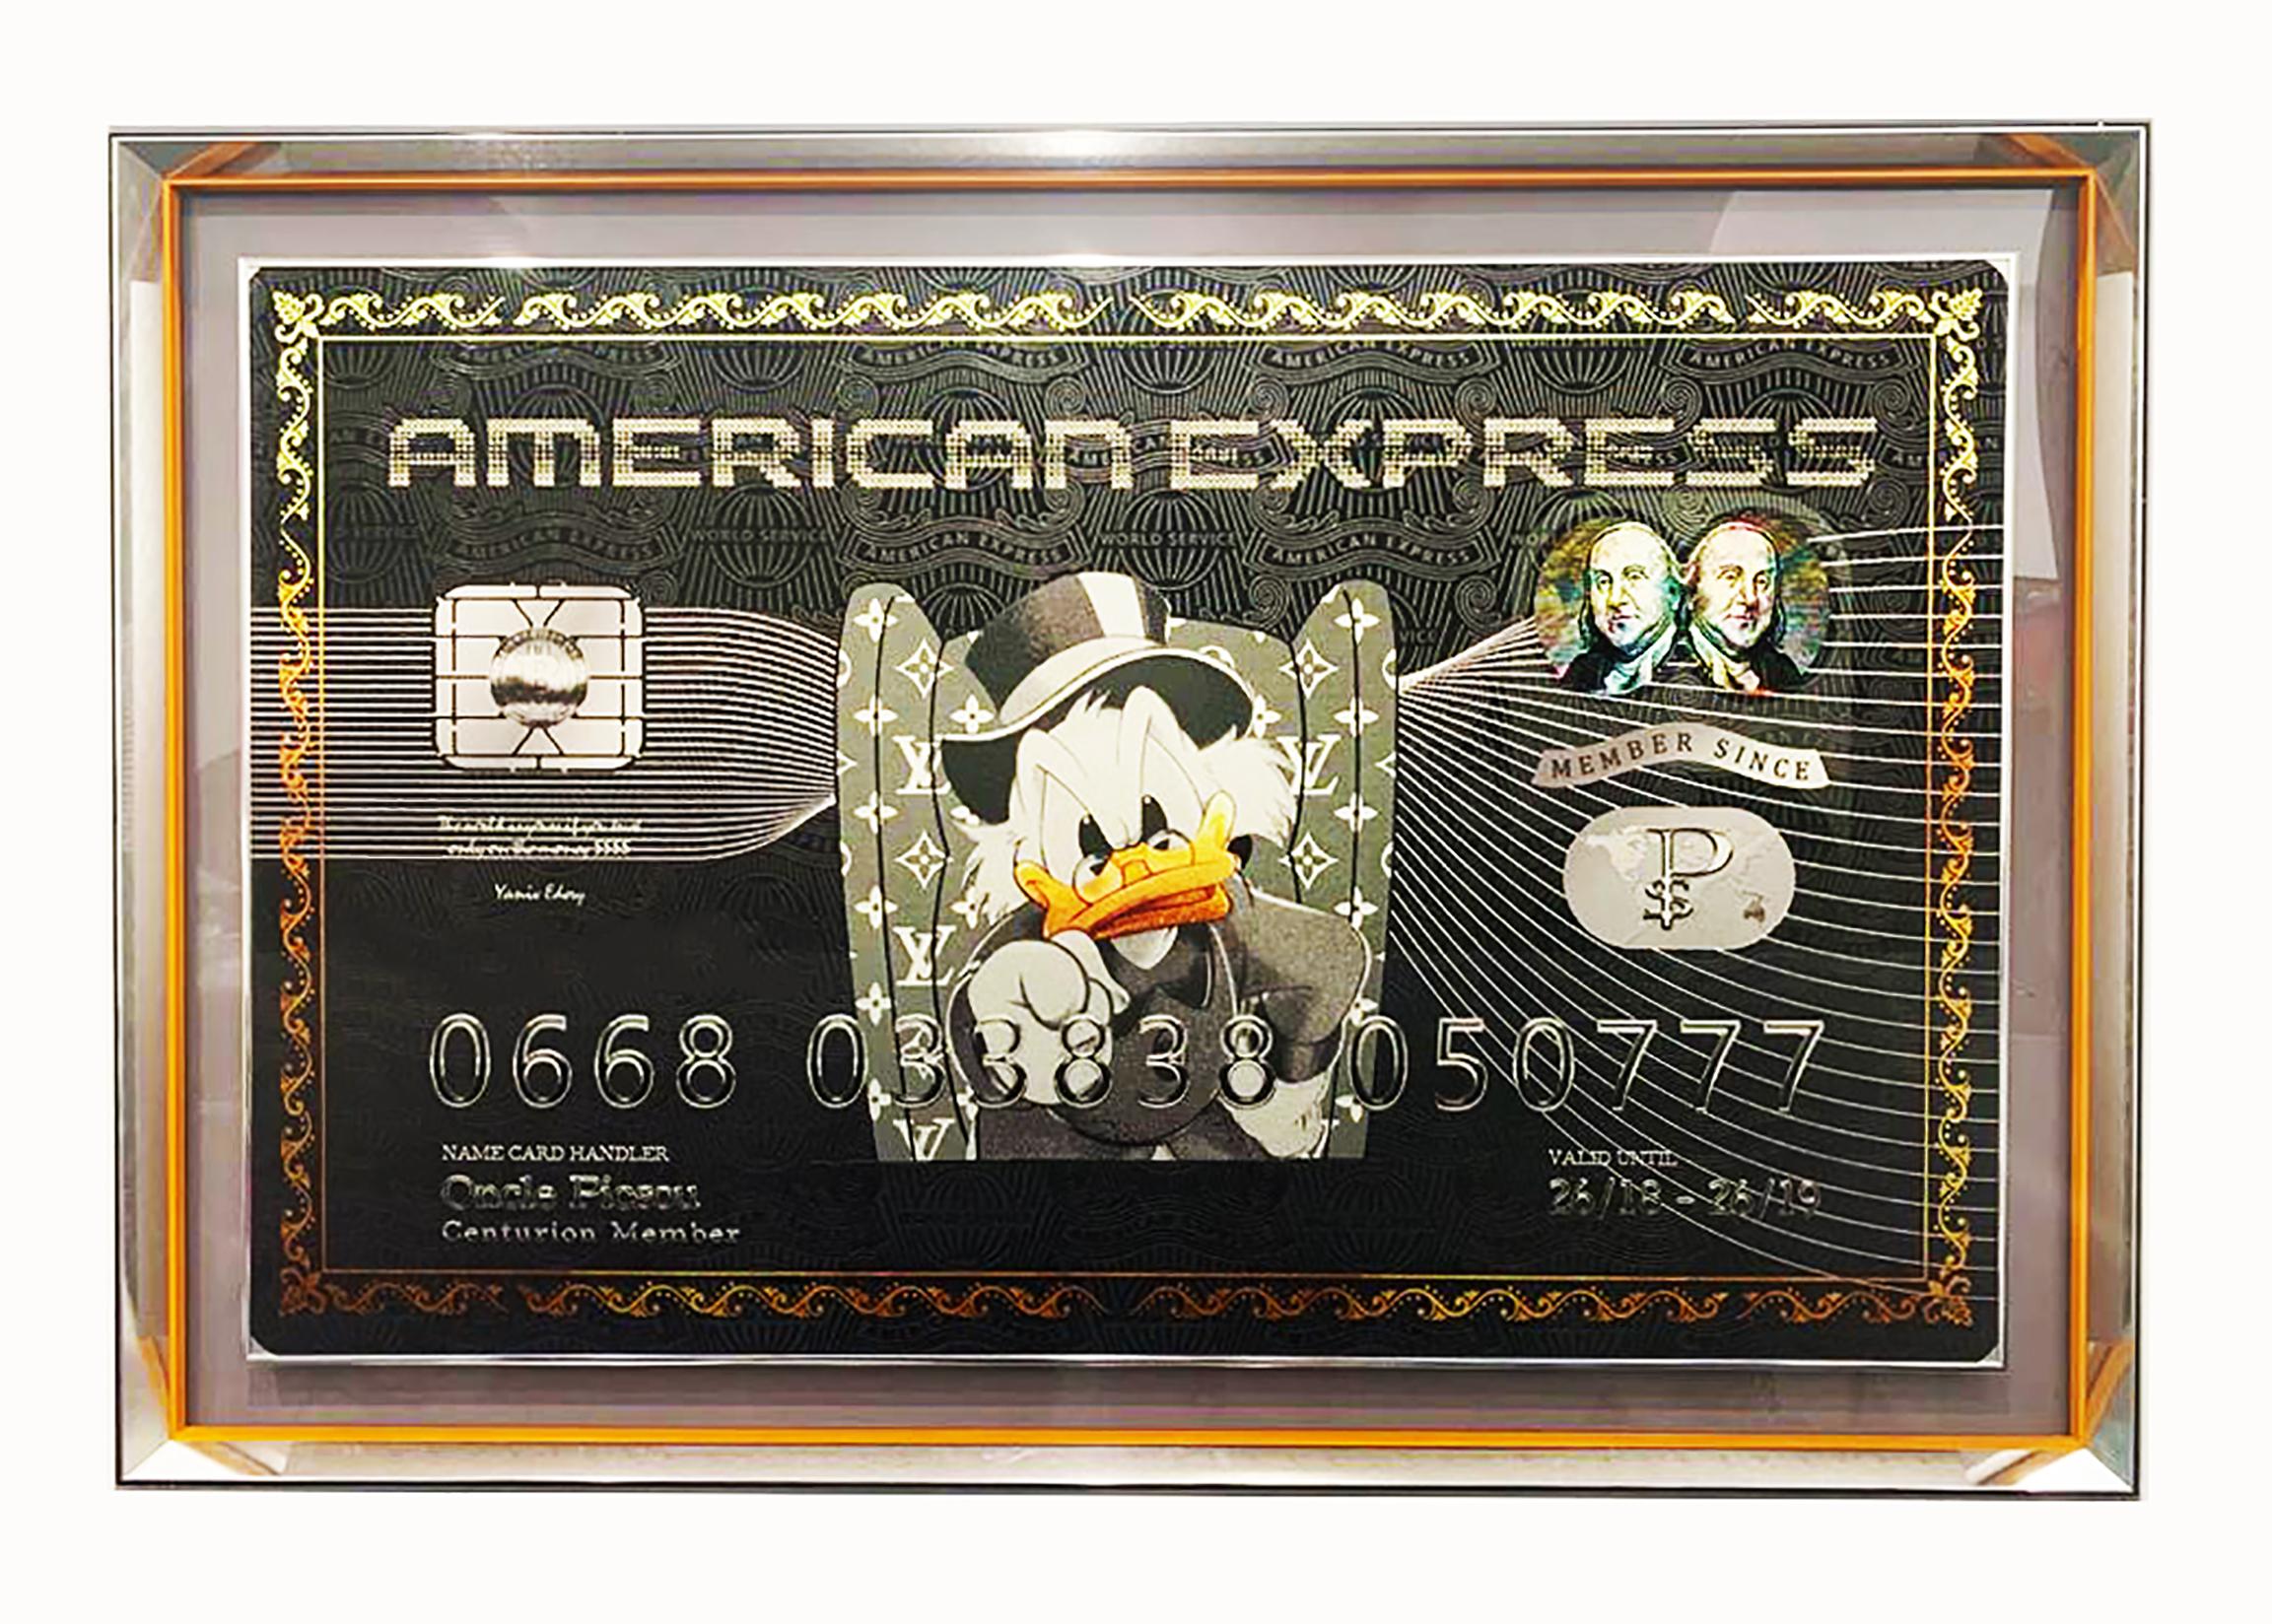 Legendary "American Express" by Edery, Pop Art